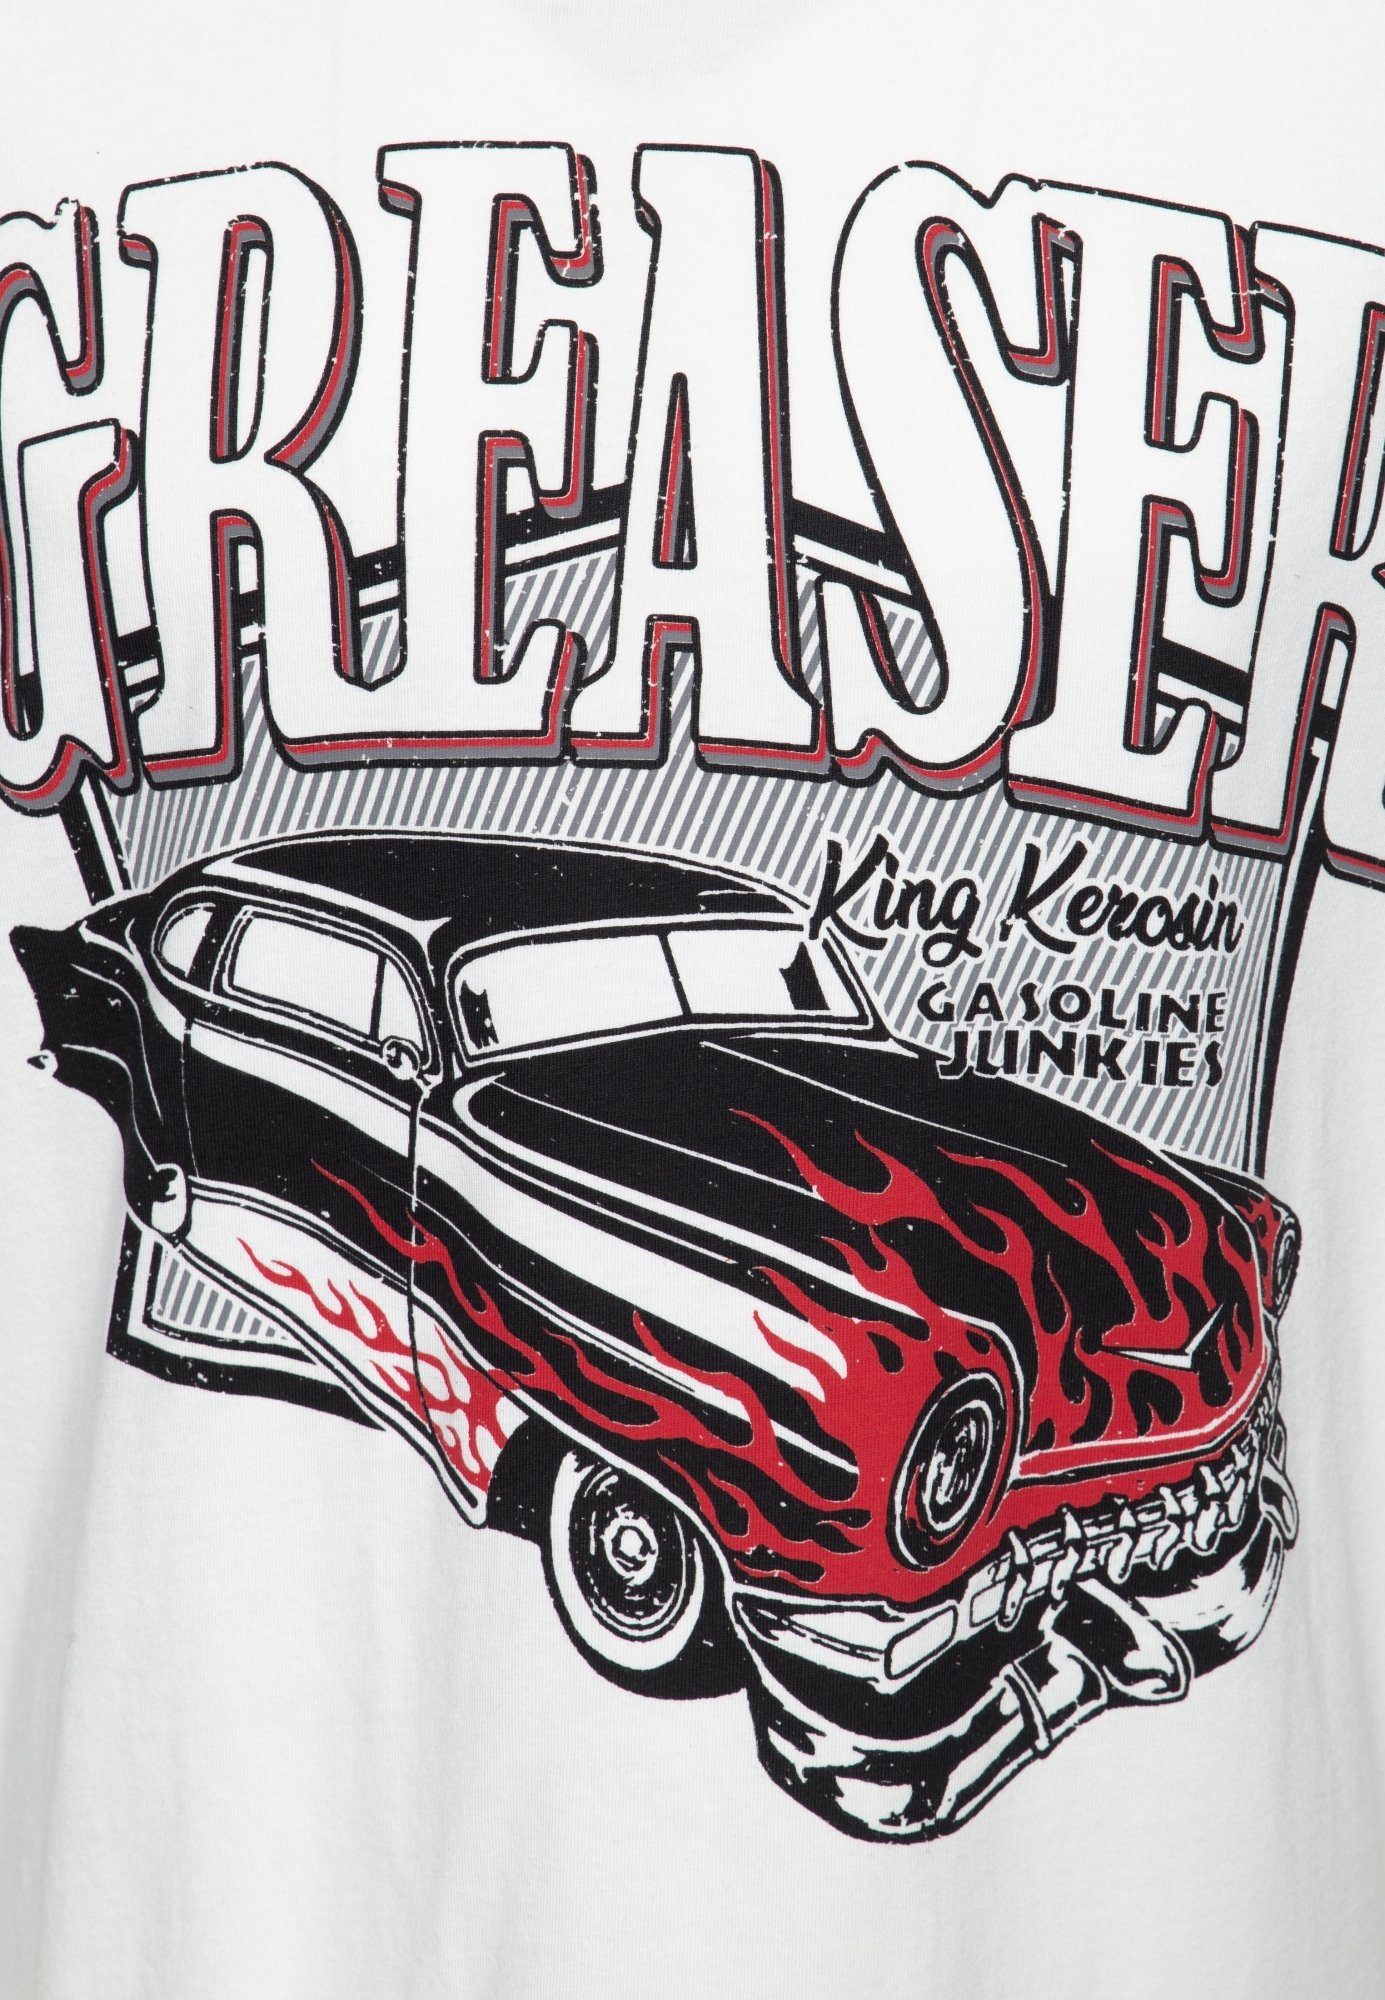 mit offwhite Vintage-Print coolem Gasoline junkies T-Shirt KingKerosin